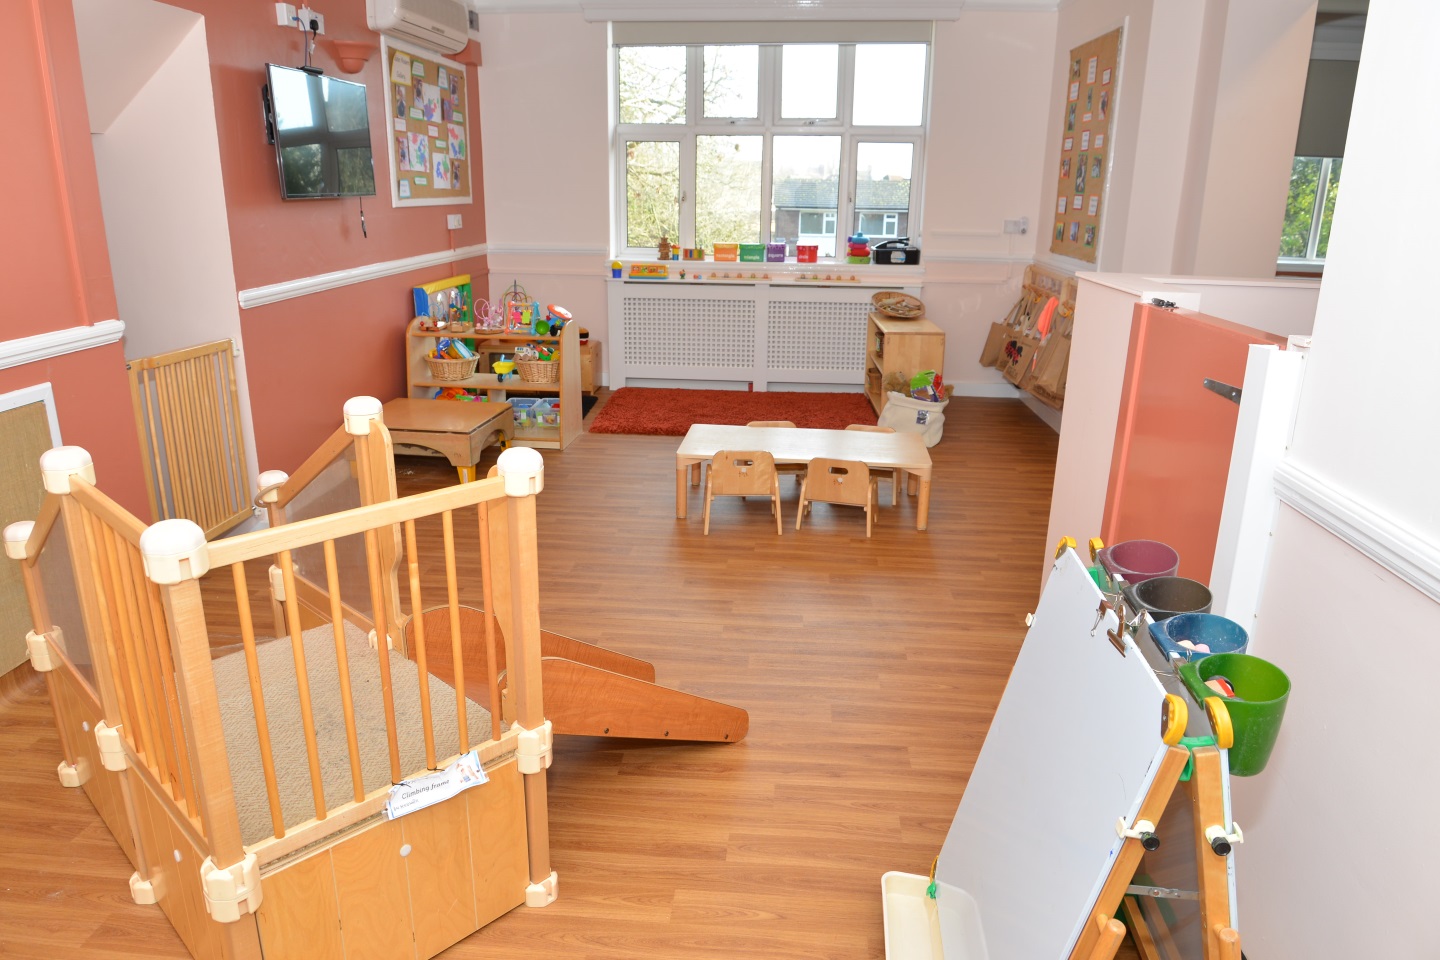 Bright Horizons Surbiton Day Nursery and Preschool Surrey 020 3906 6567